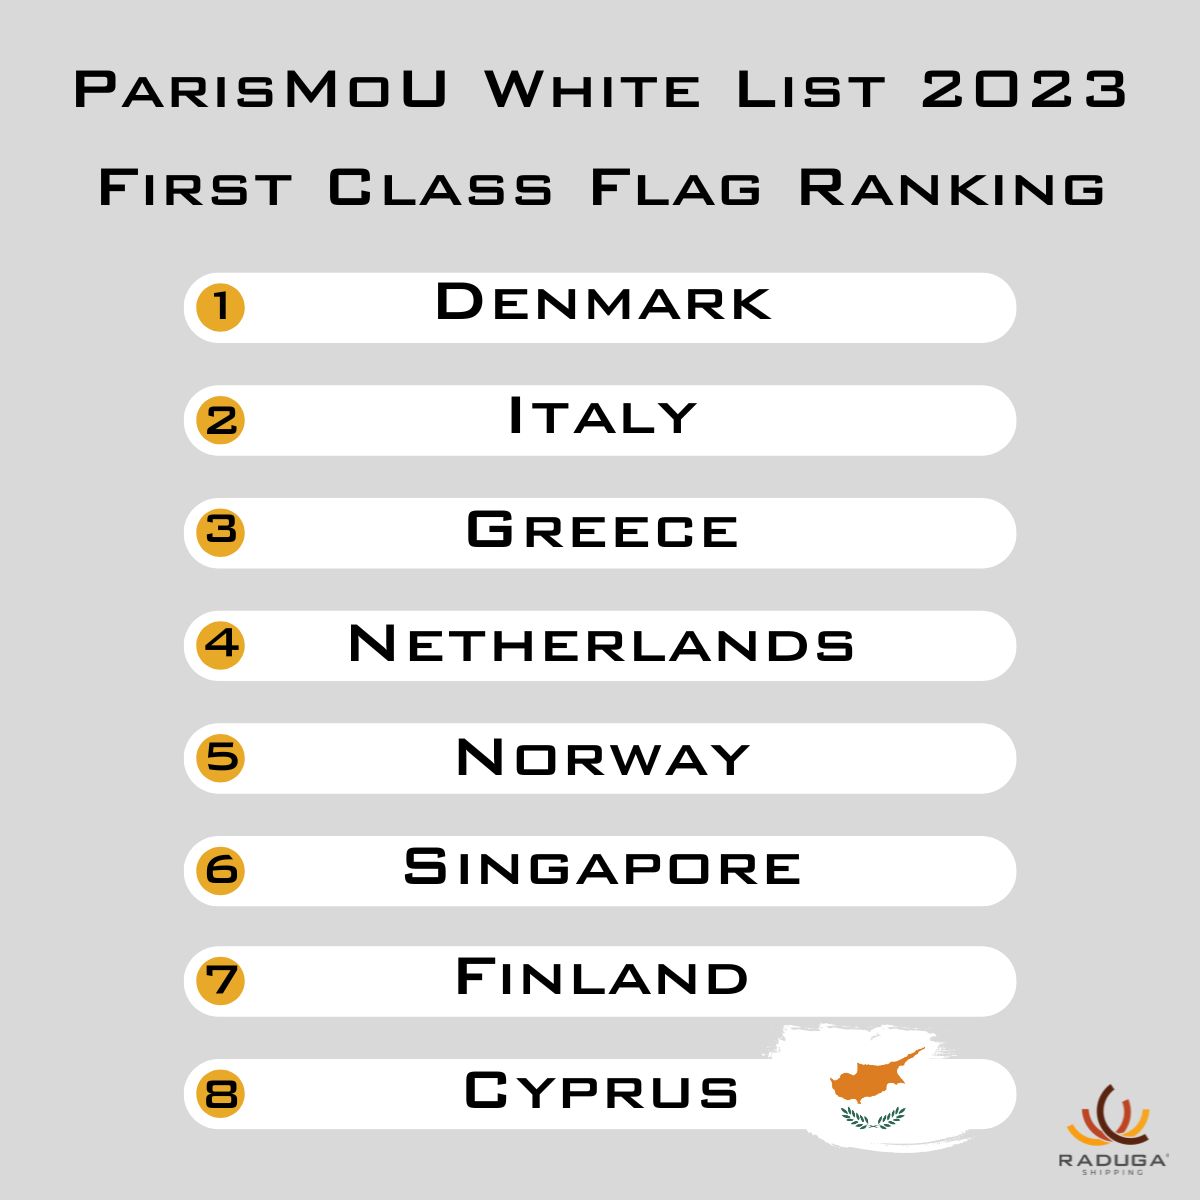 Cyprus in TOP 10 ParisMoU 2023